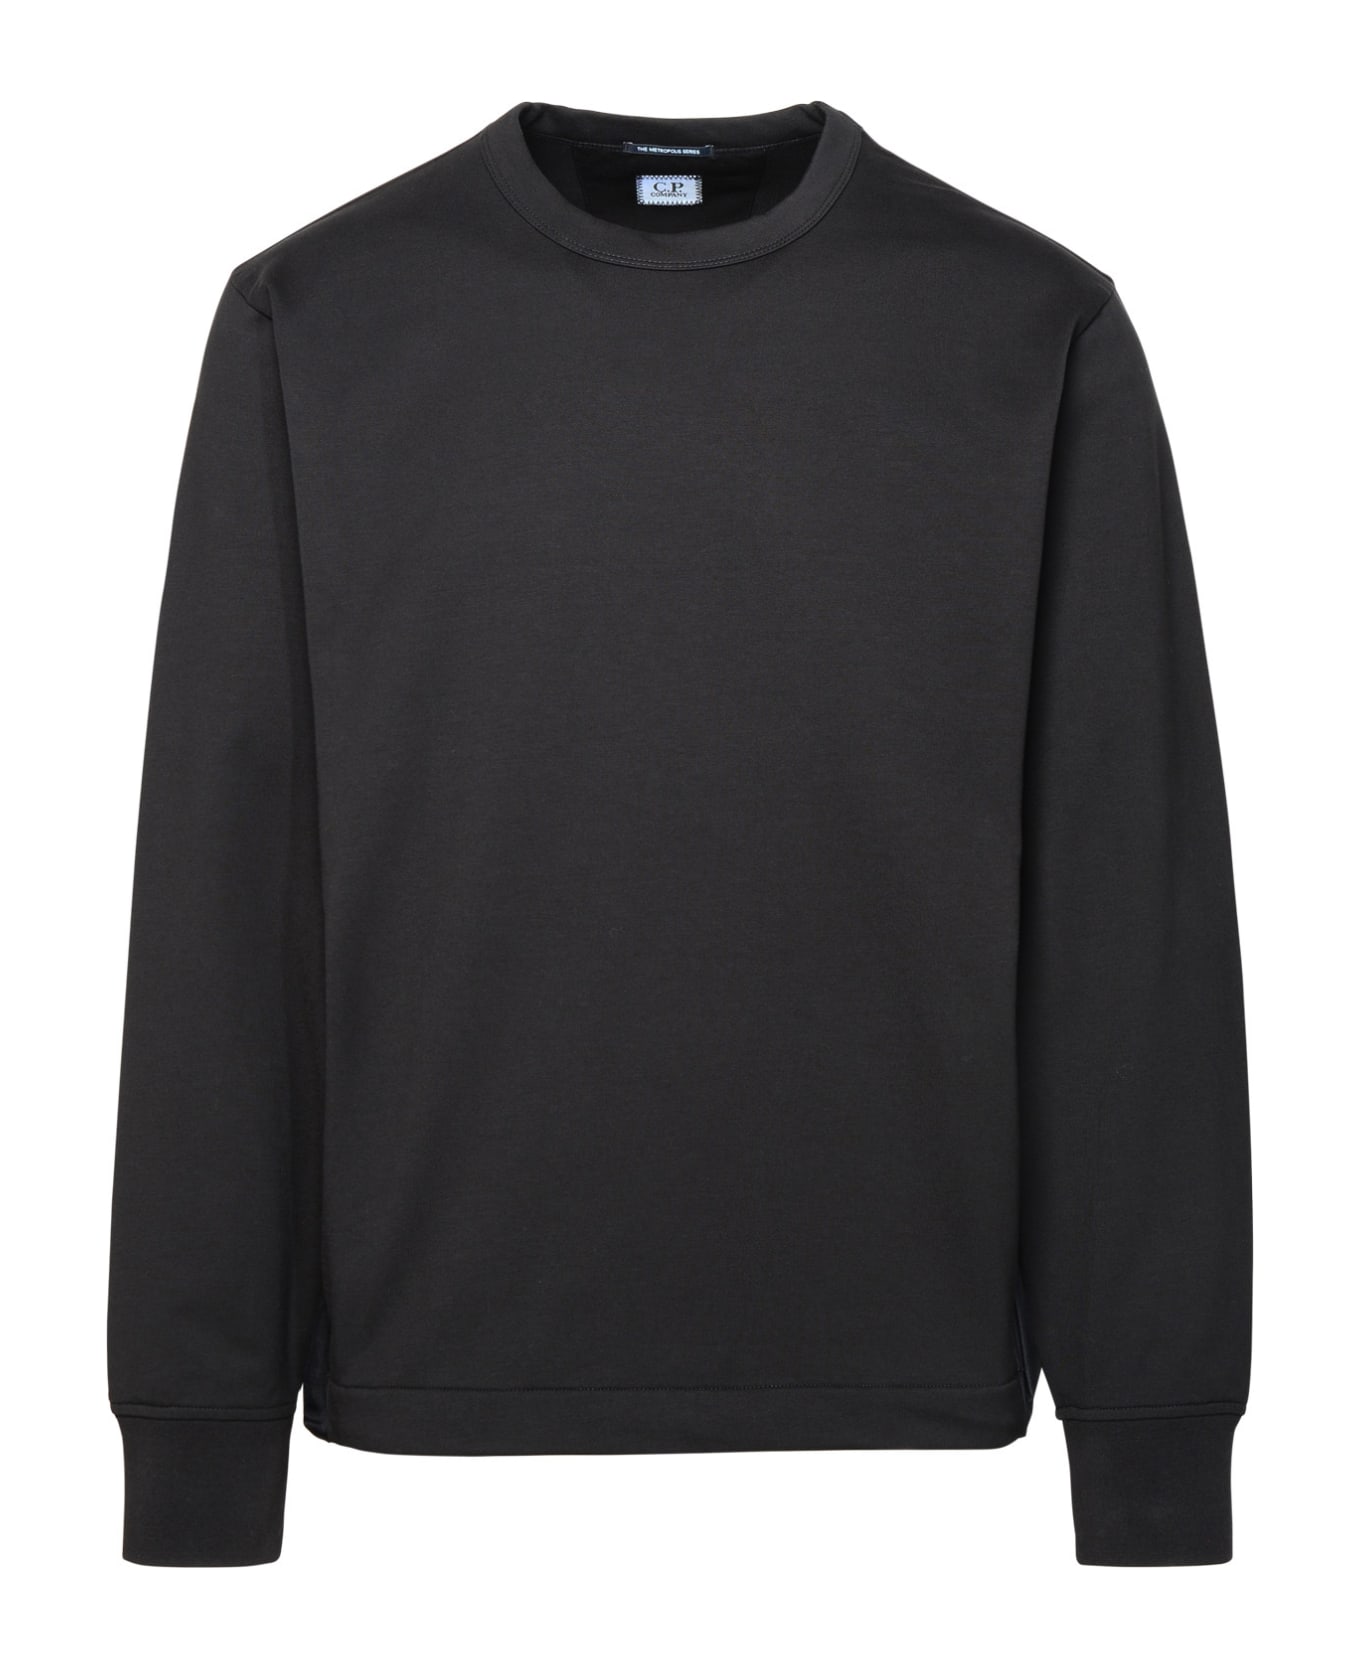 C.P. Company Black Cotton Blend Sweatshirt - Black